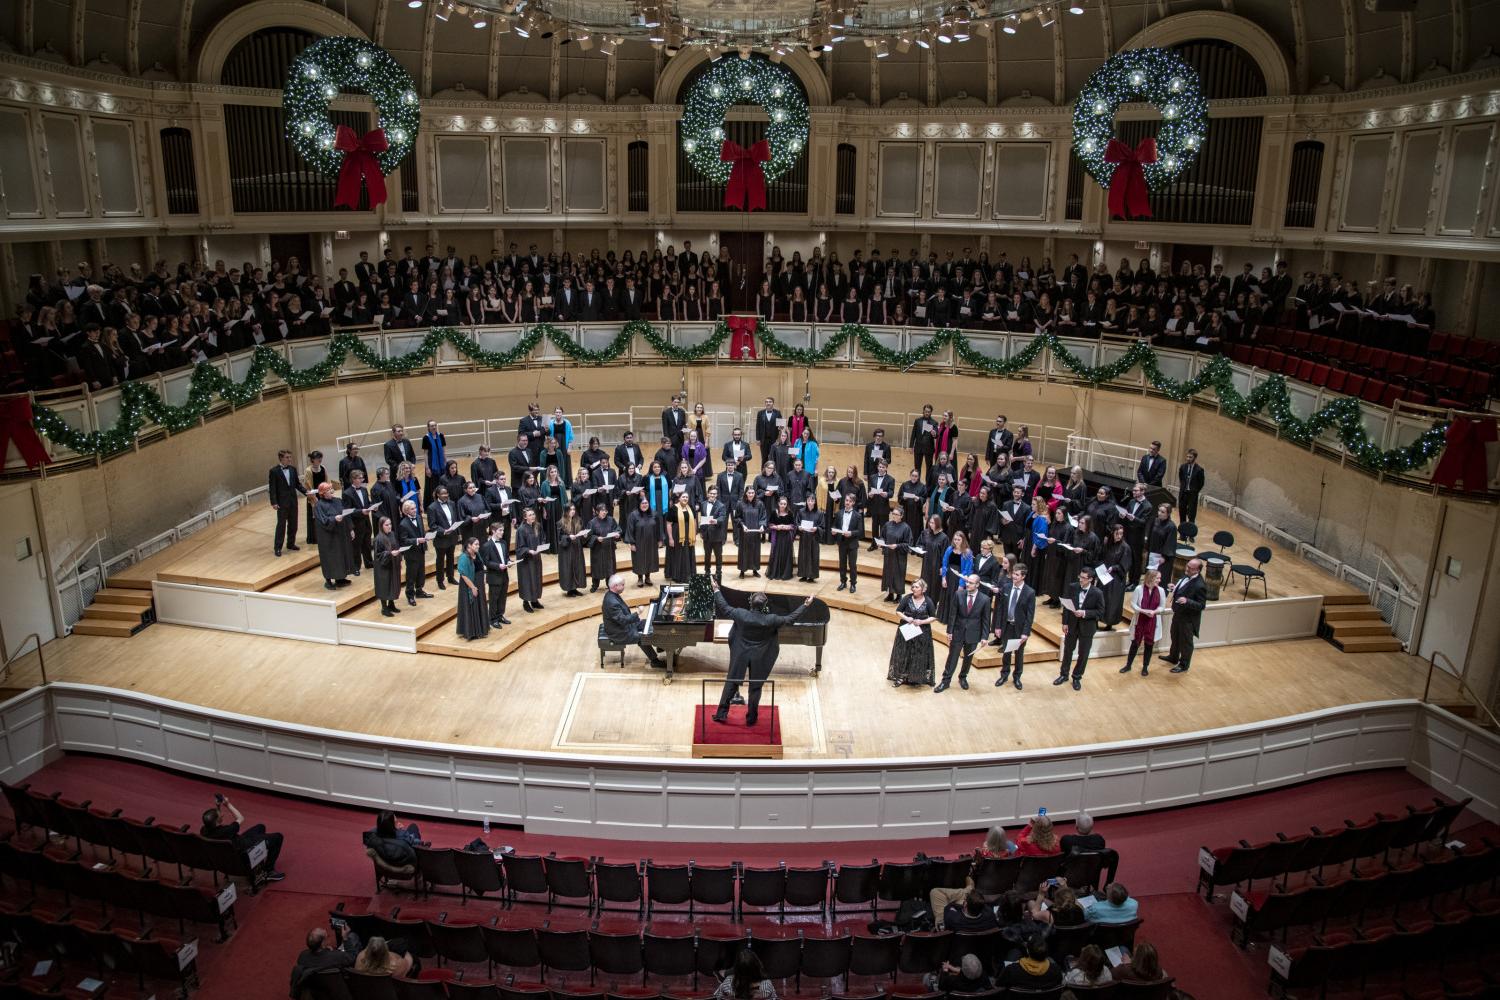 The <a href='http://learn.thebowloflife.com'>全球十大赌钱排行app</a> Choir performs in the Chicago Symphony Hall.